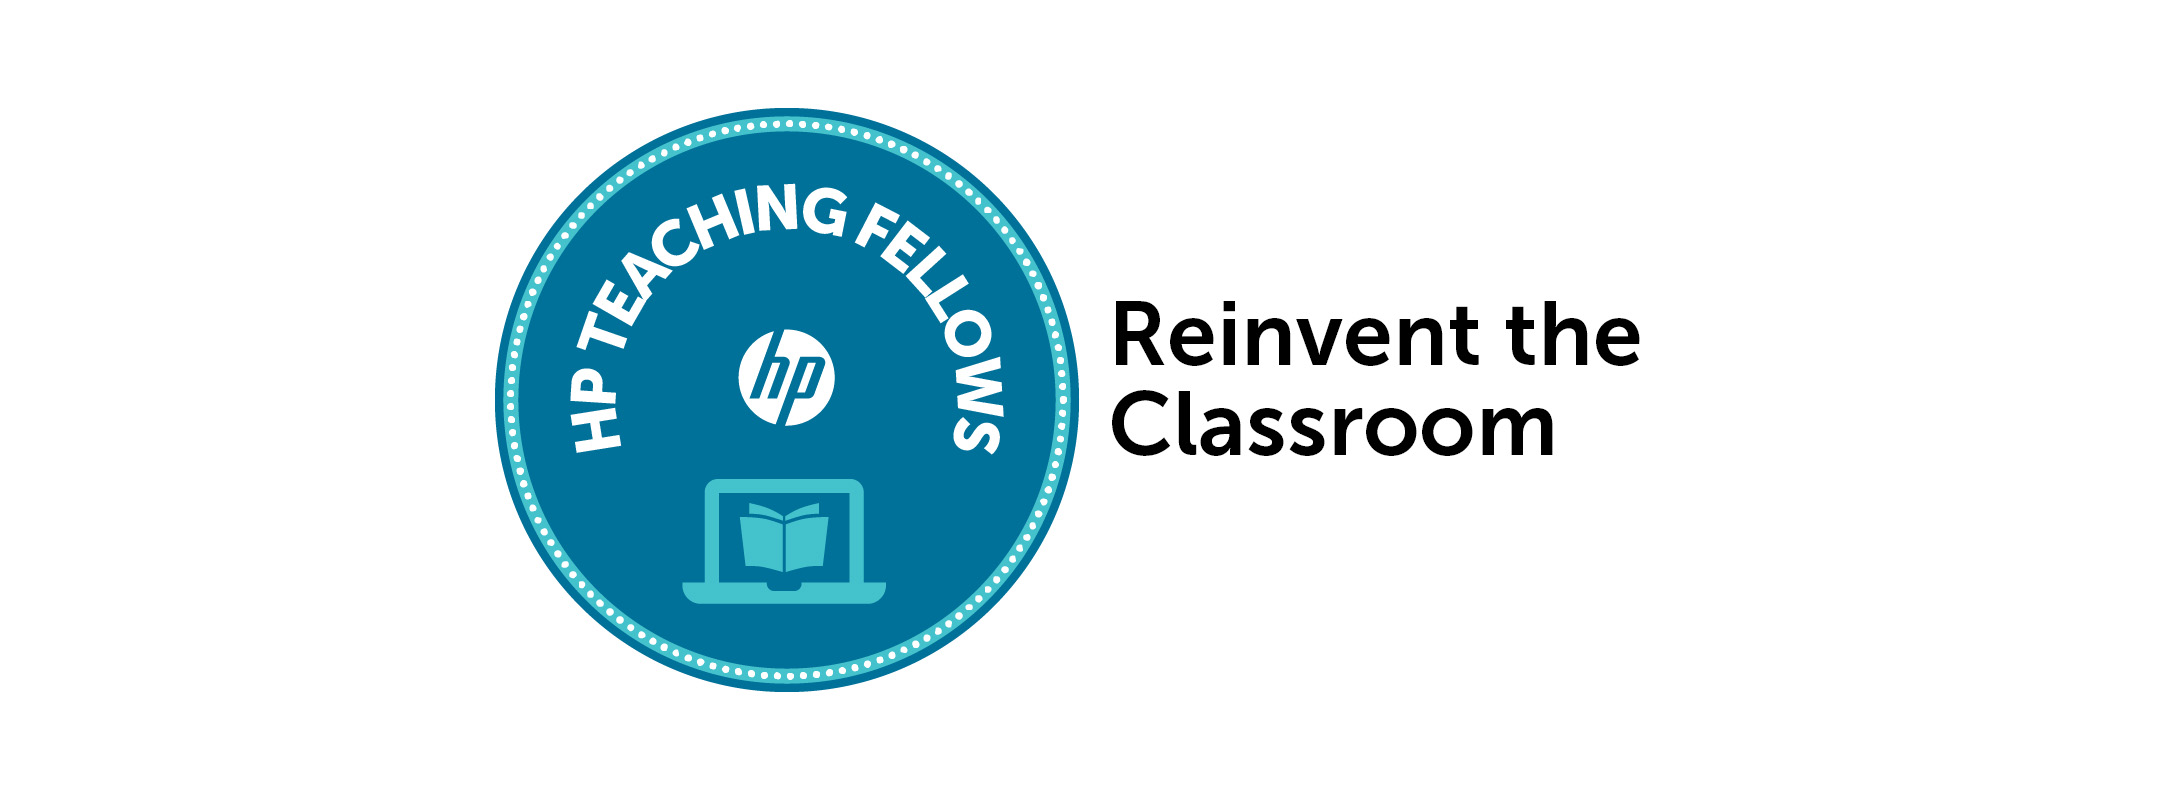 Reinvent the Classroom HP teaching Fellows badge